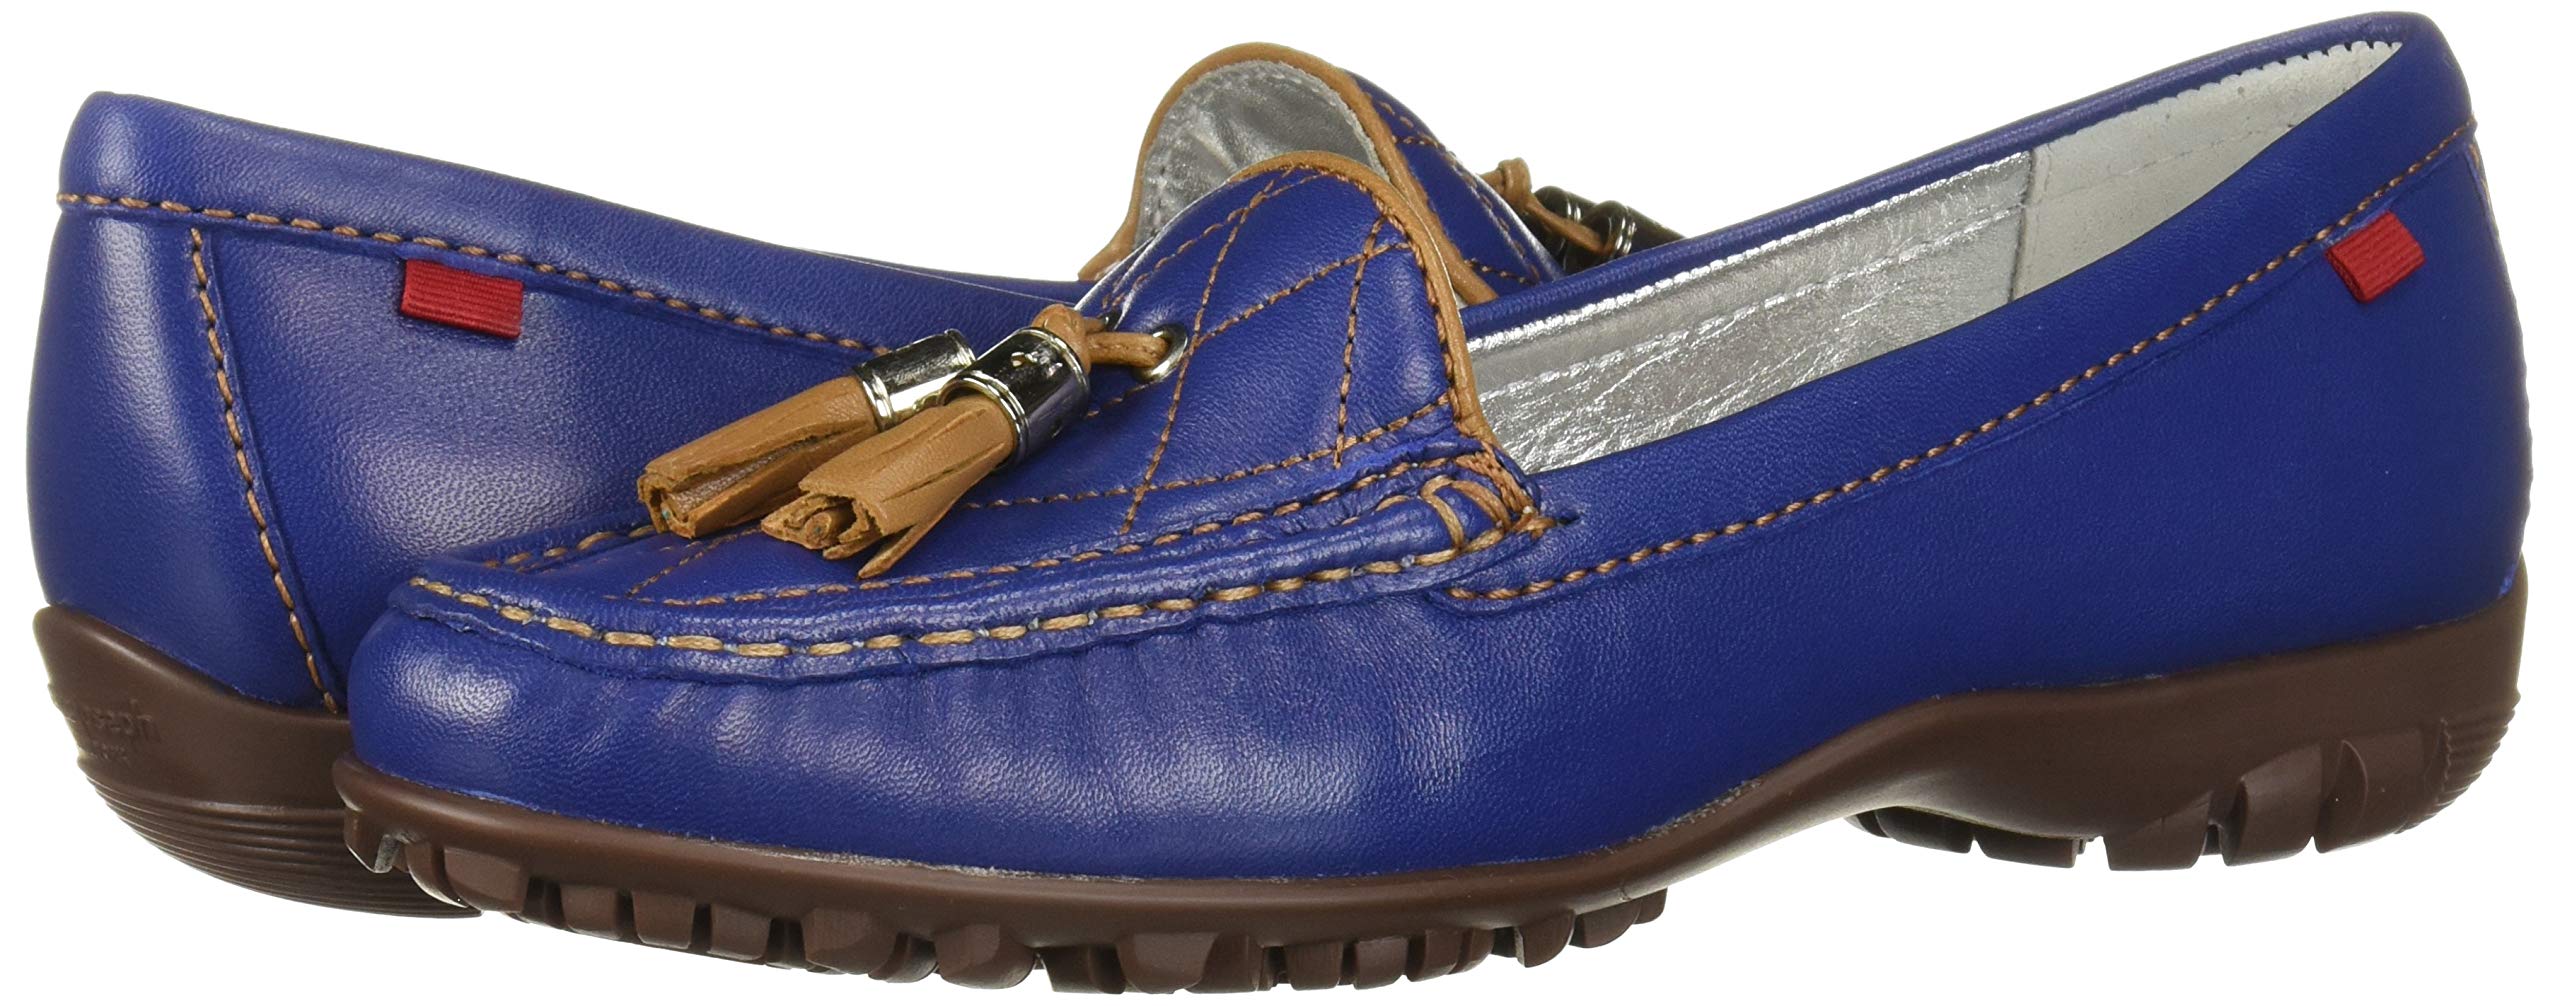 MARC JOSEPH NEW YORK Women's Golf Leather Made in Brazil Wall Street Fashion Shoe Moccasin (7763777683694)